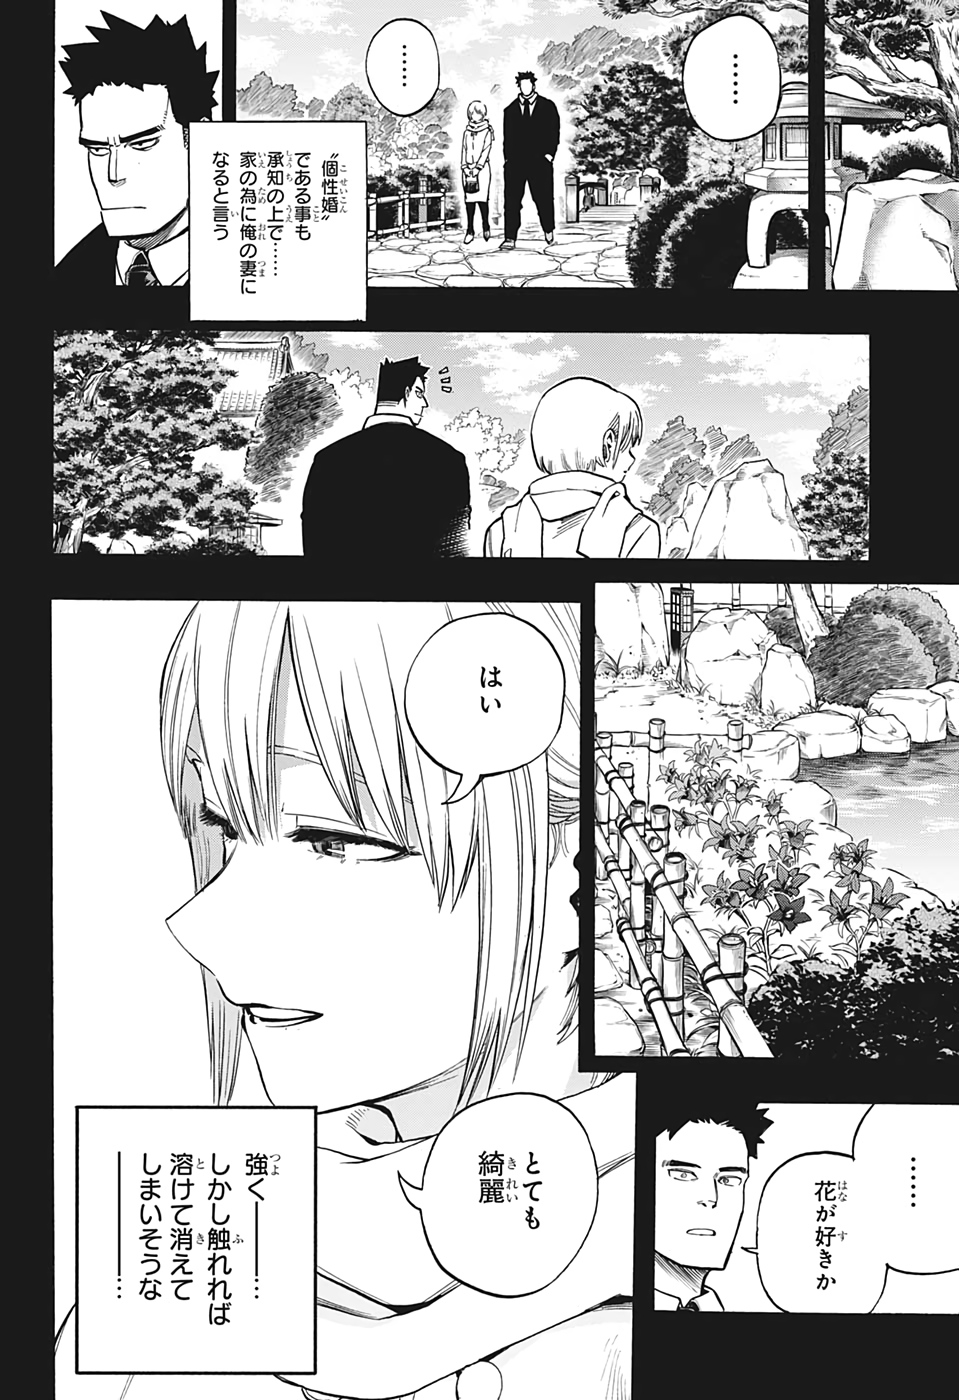 Boku no Hero Academia - Chapter 301 - Page 2